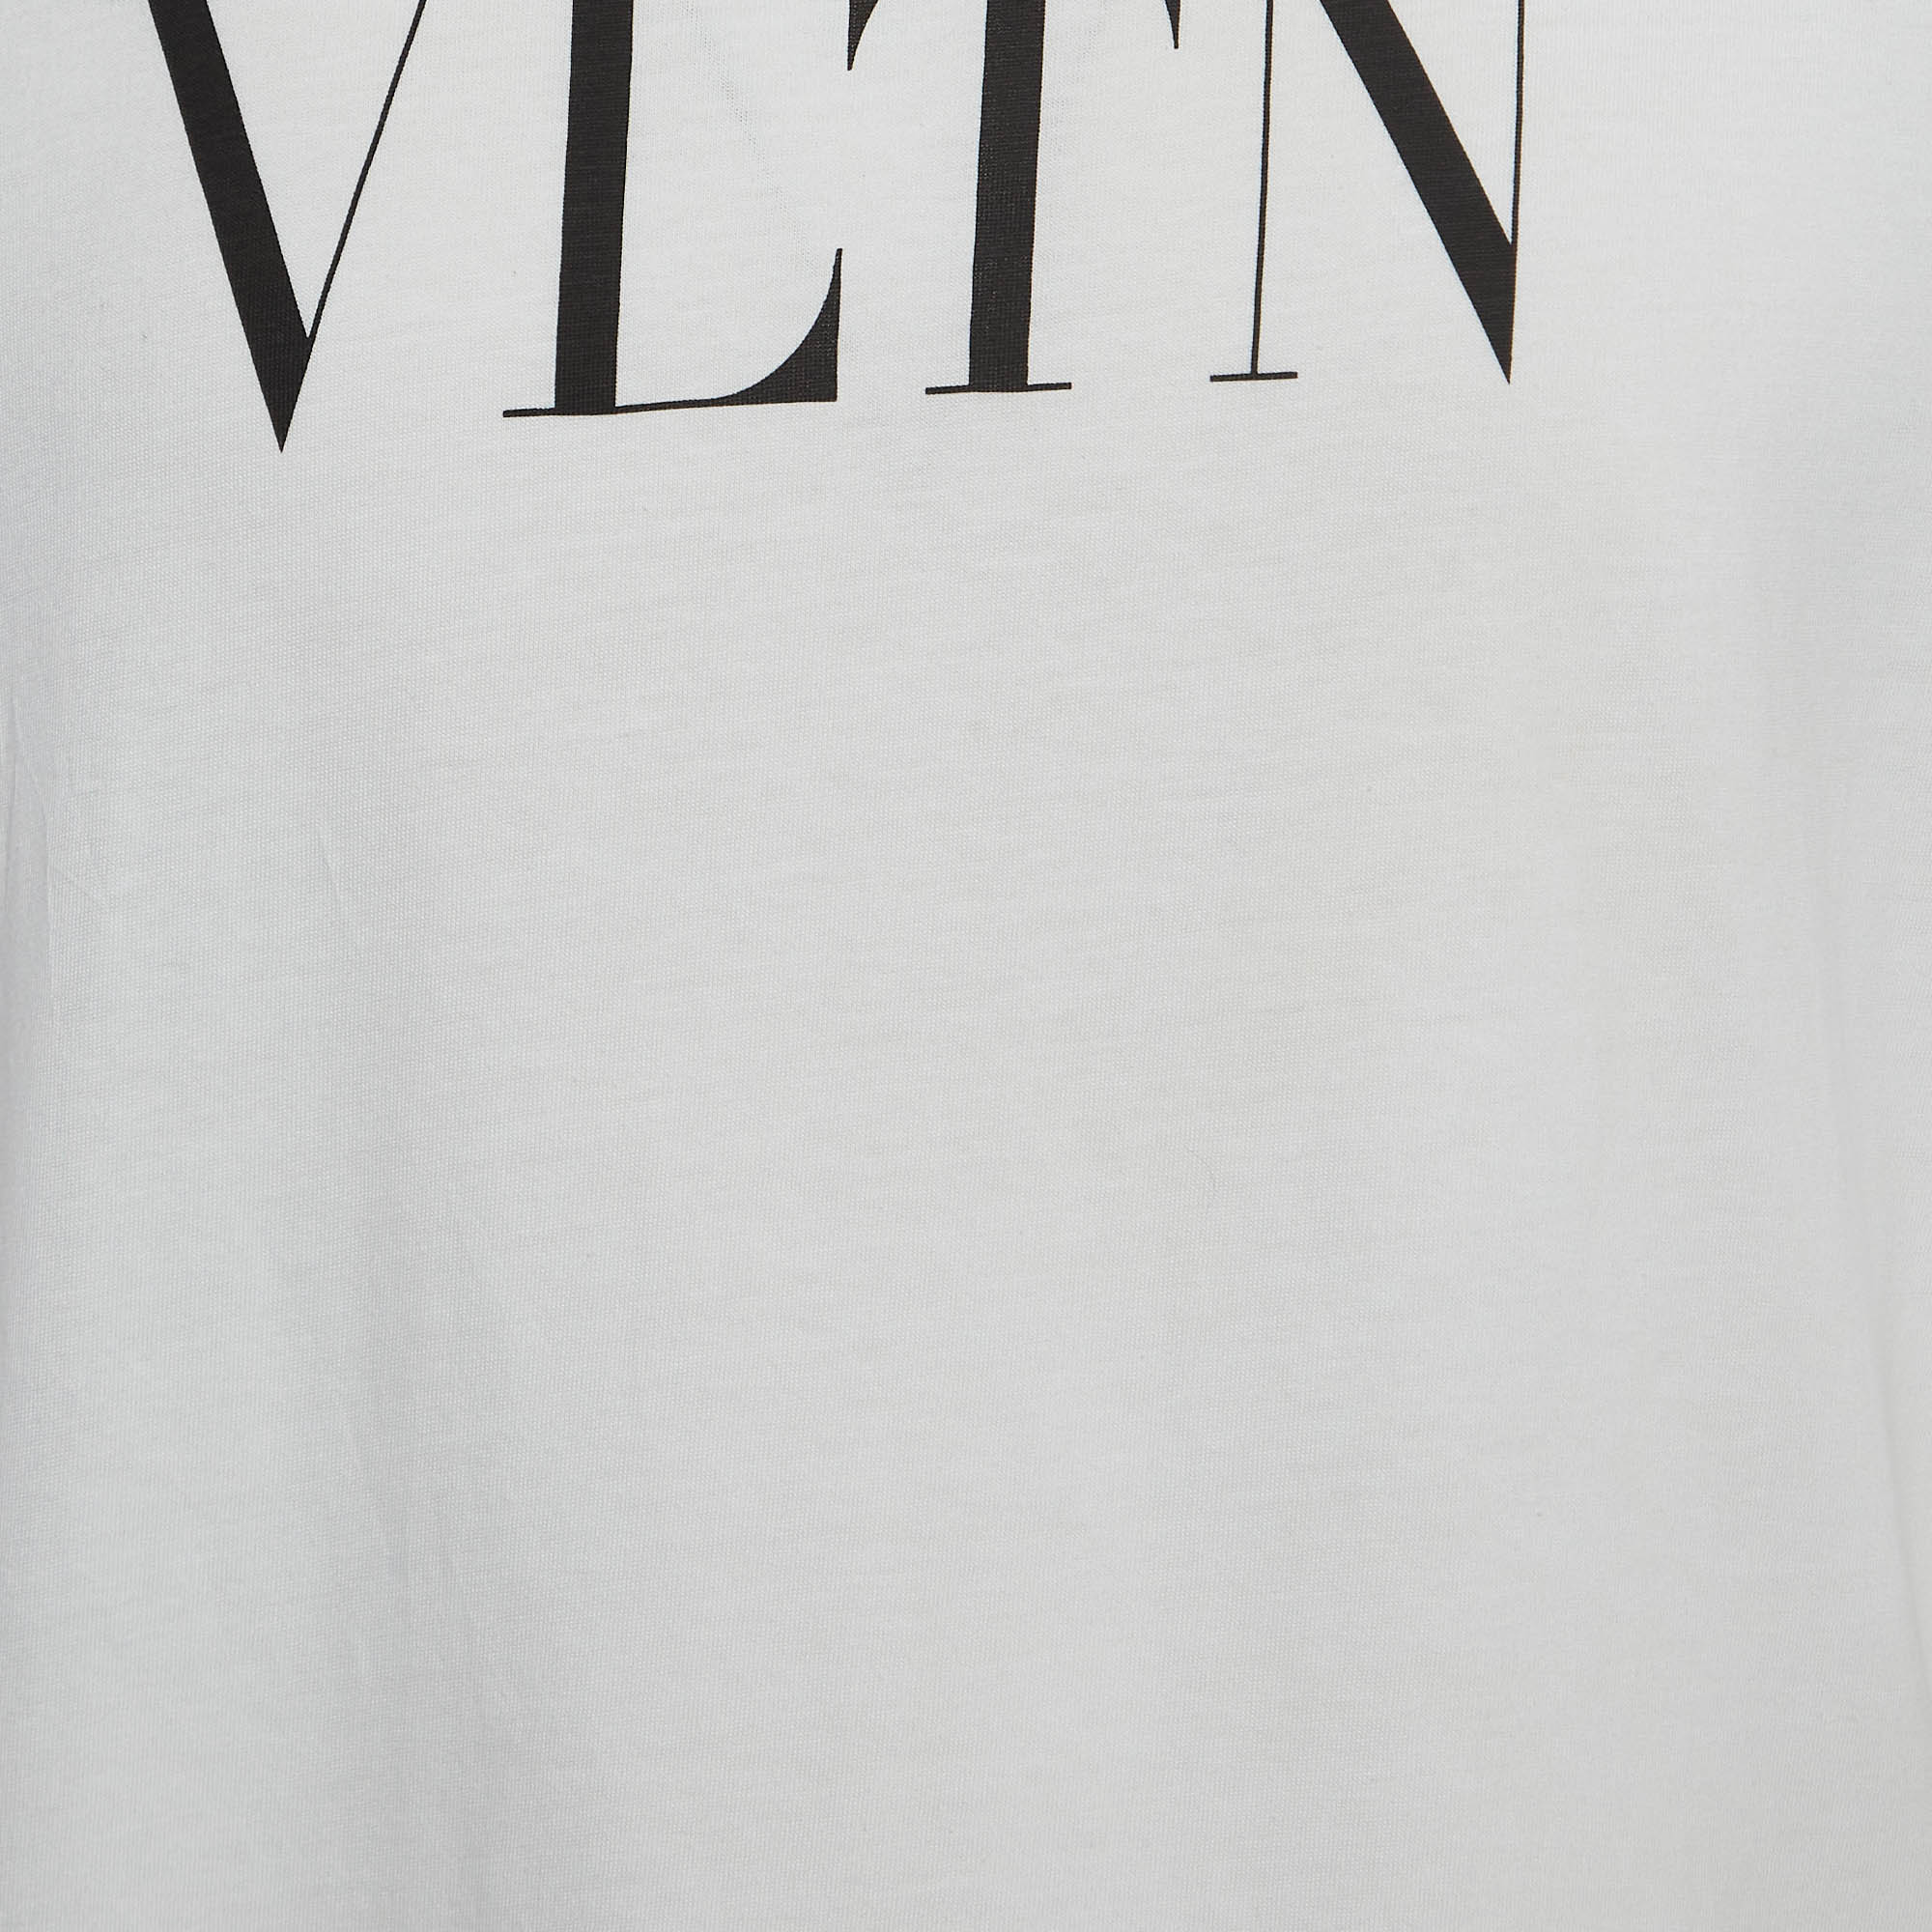 Valentino White VLTN Print Cotton Half Sleeve T-Shirt XL